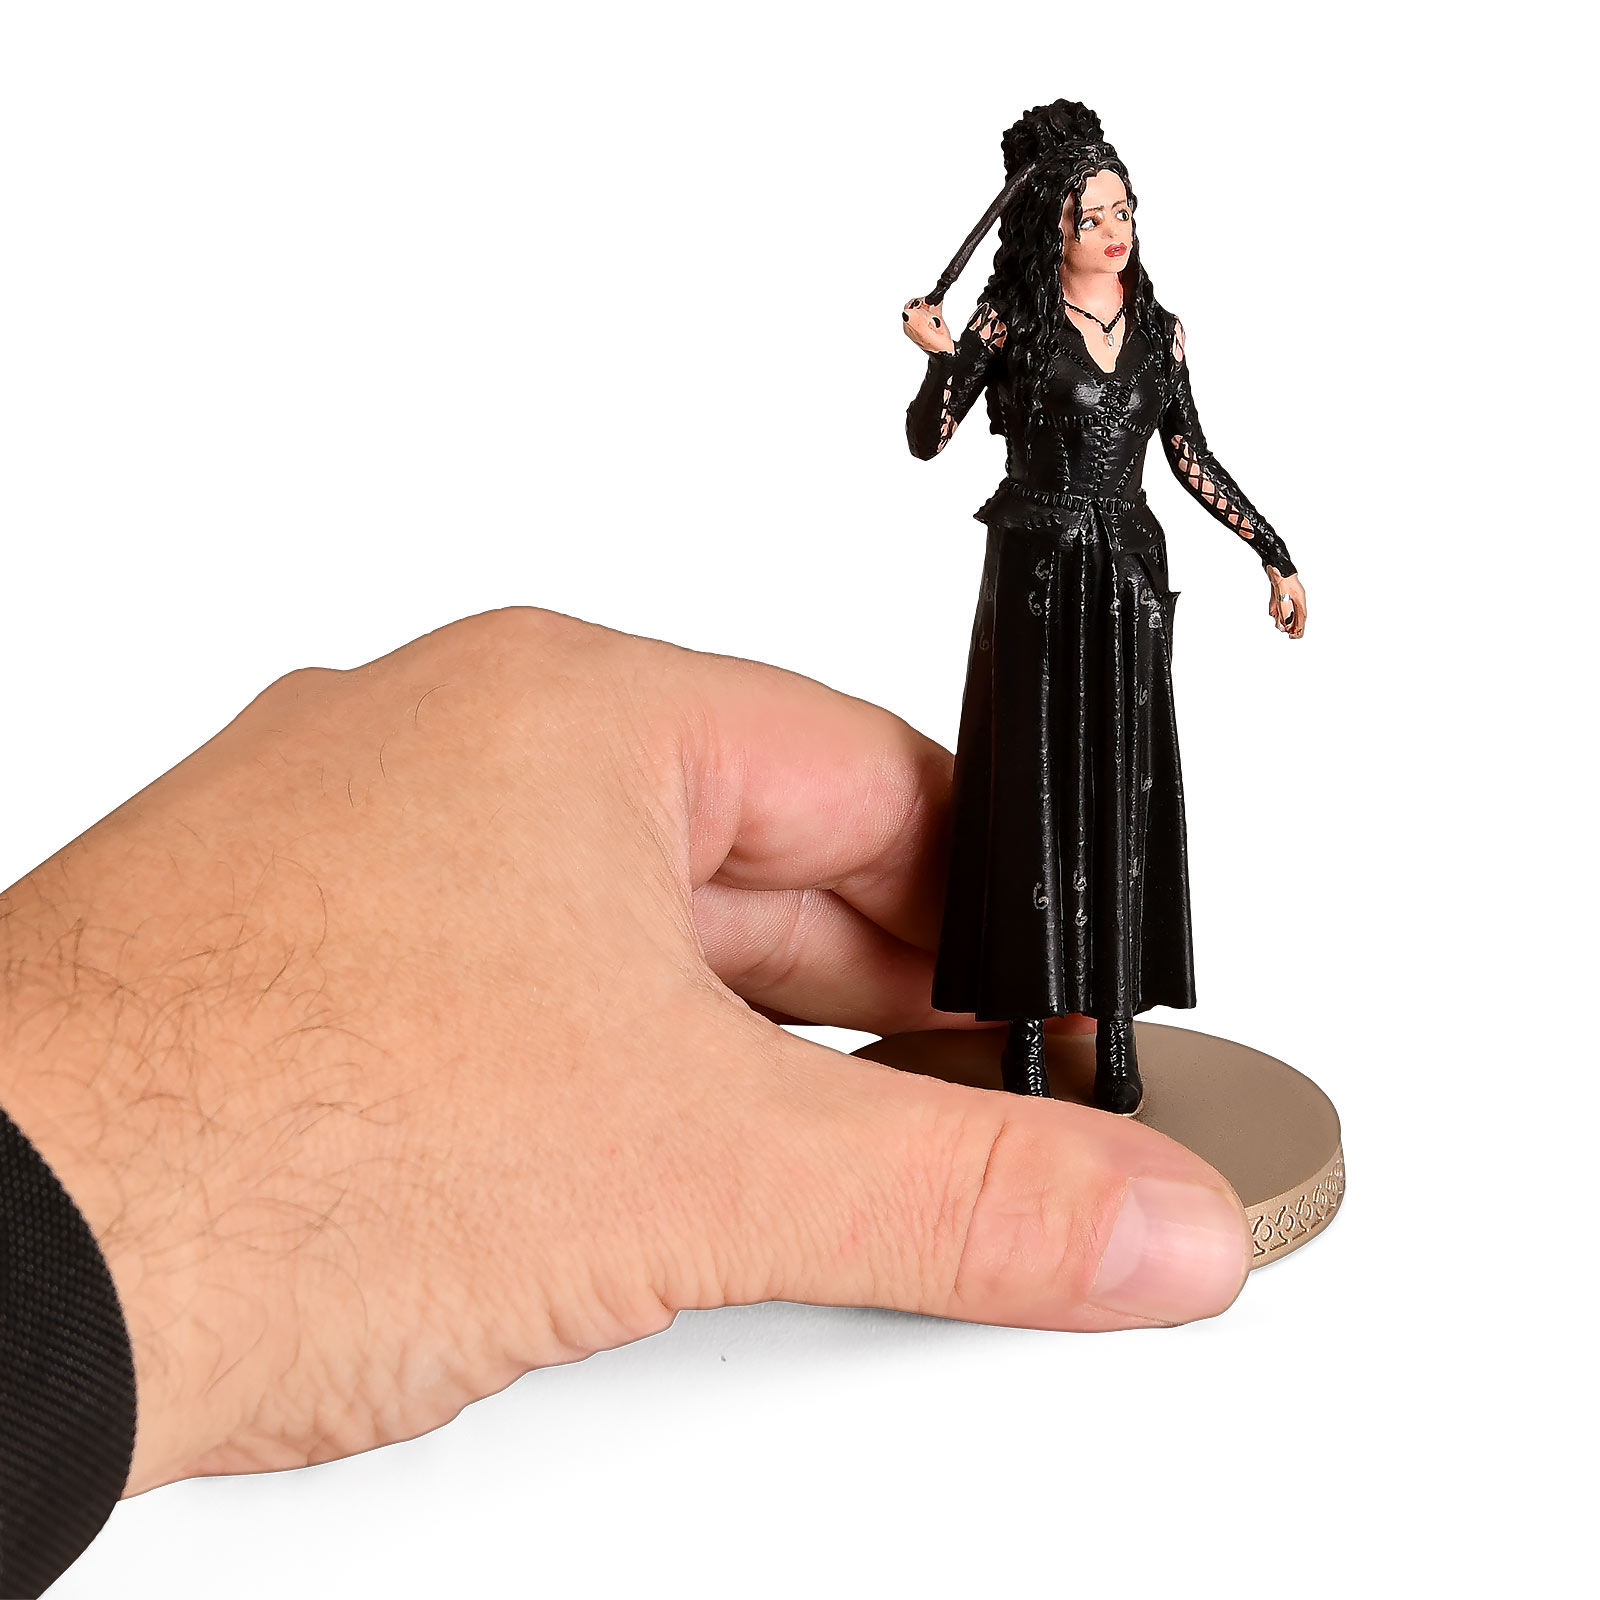 Bellatrix Lestrange Hero Collector Figur 12 cm - Harry Potter